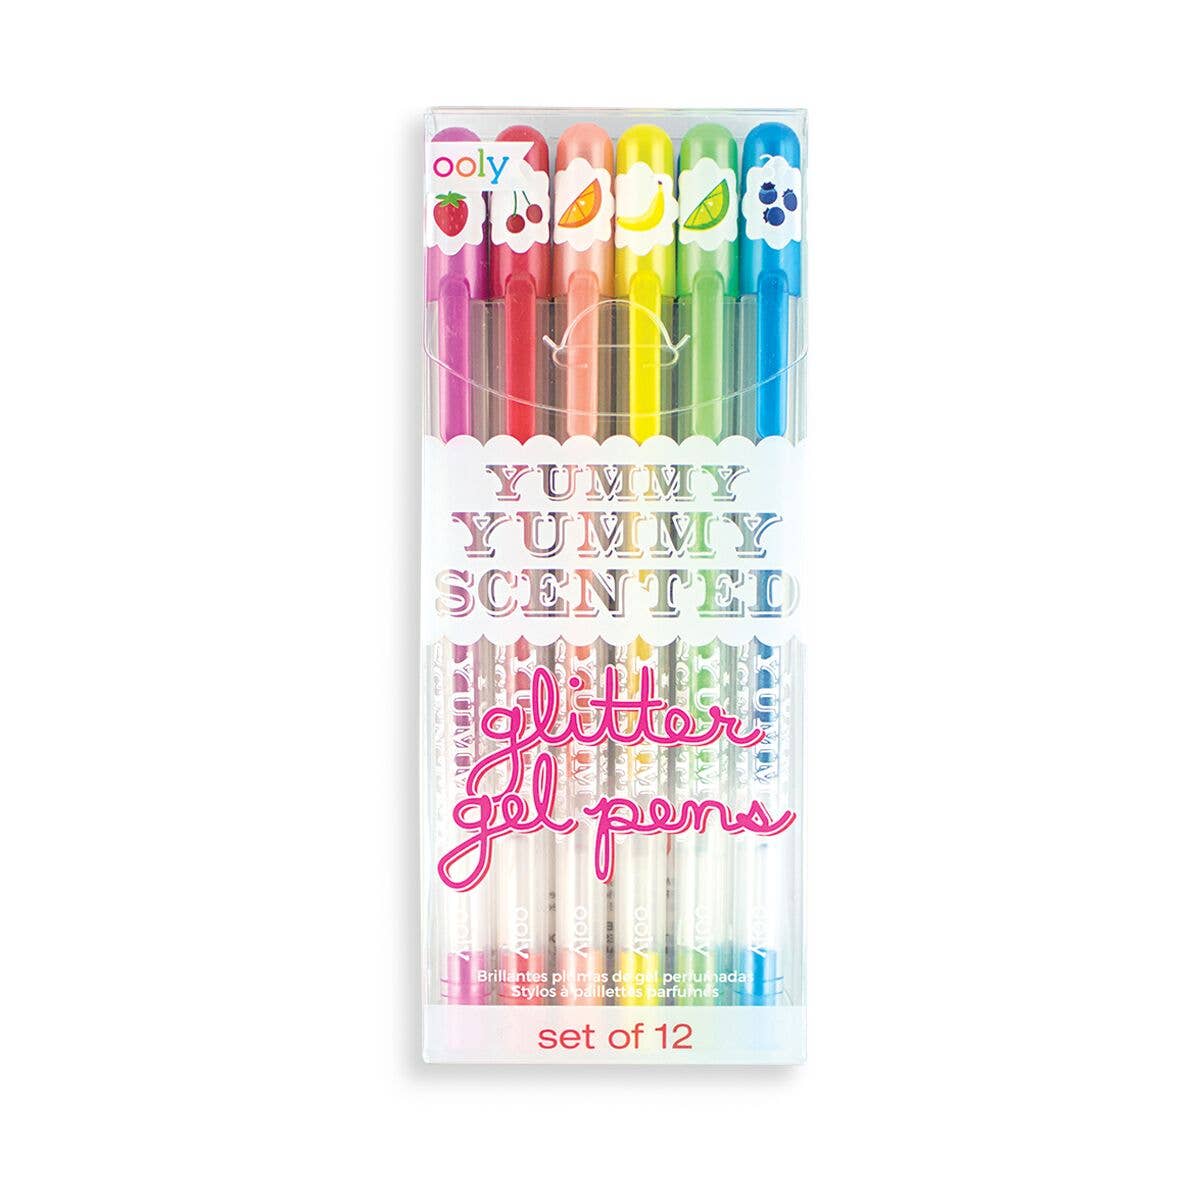 Ooly Mini Doodlers Fruity Scented Gel Pens - Set of 20